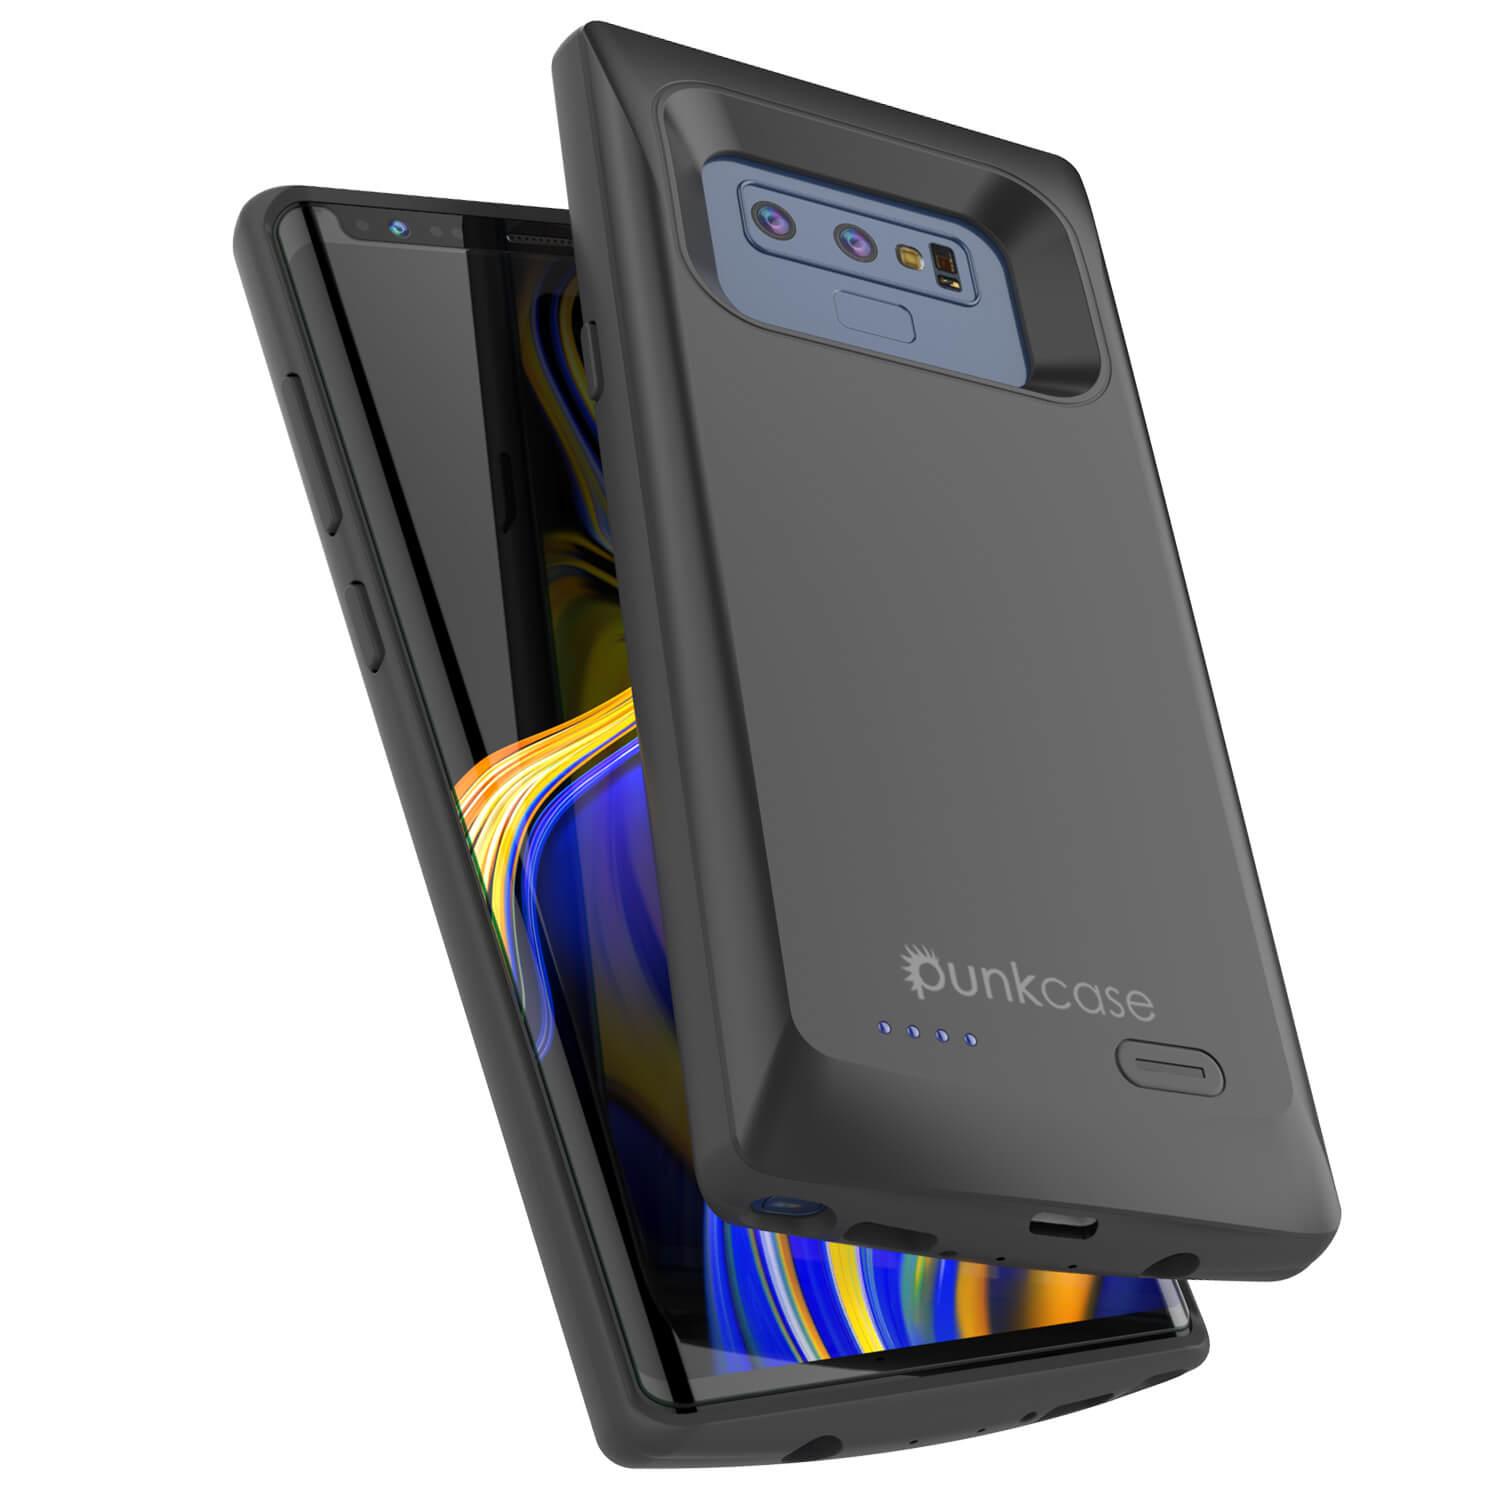 Galaxy Note 9 5000mAH Battery Charger W/ USB Port Slim Case [Black]